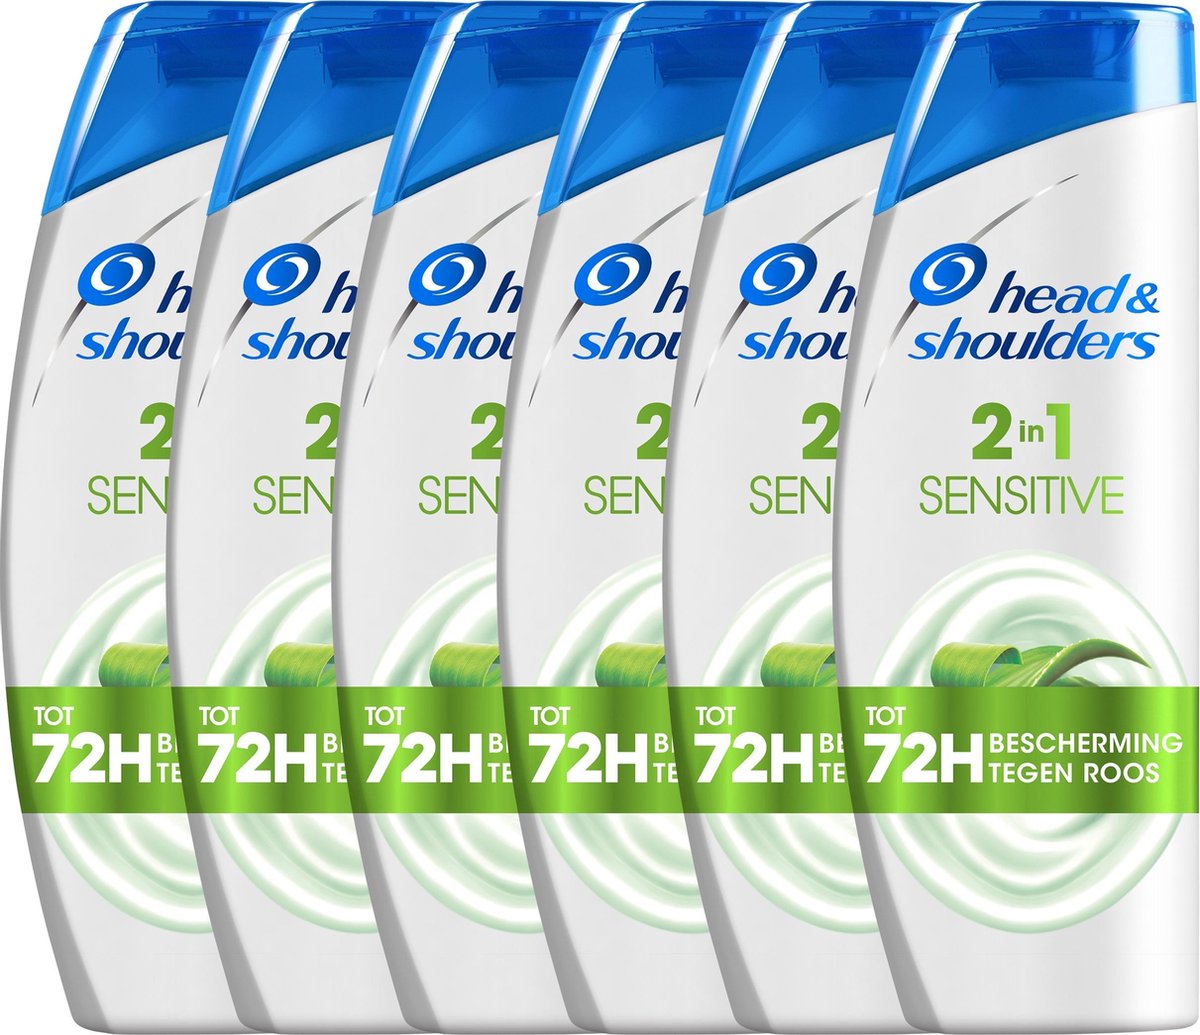 Head & Shoulders Sensitive 2-in-1 - Voordeelverpakking 6 x 270 ml - Anti-roos Shampoo